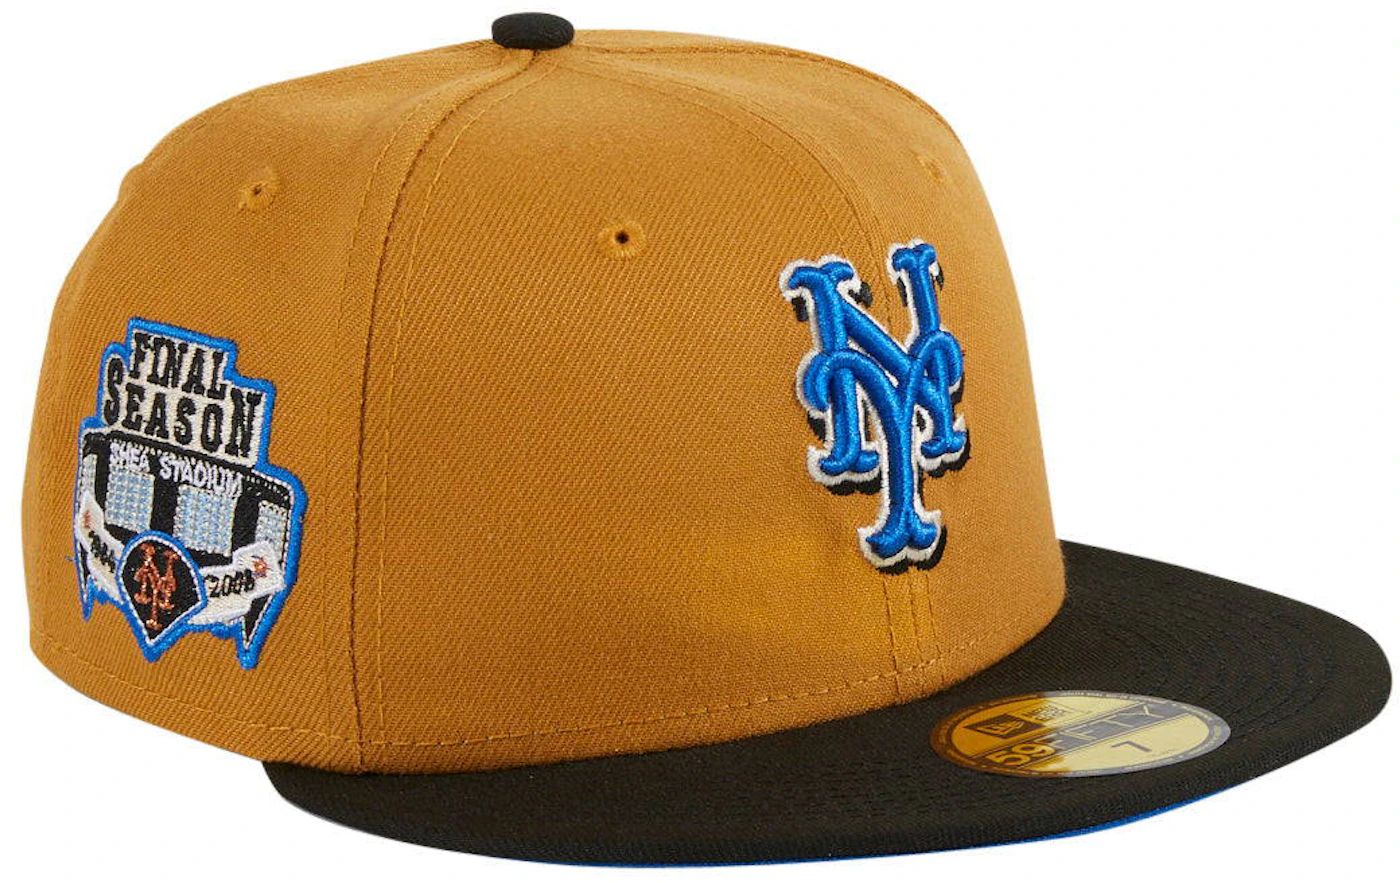 Los Mets - New Era adjustable (Orange)